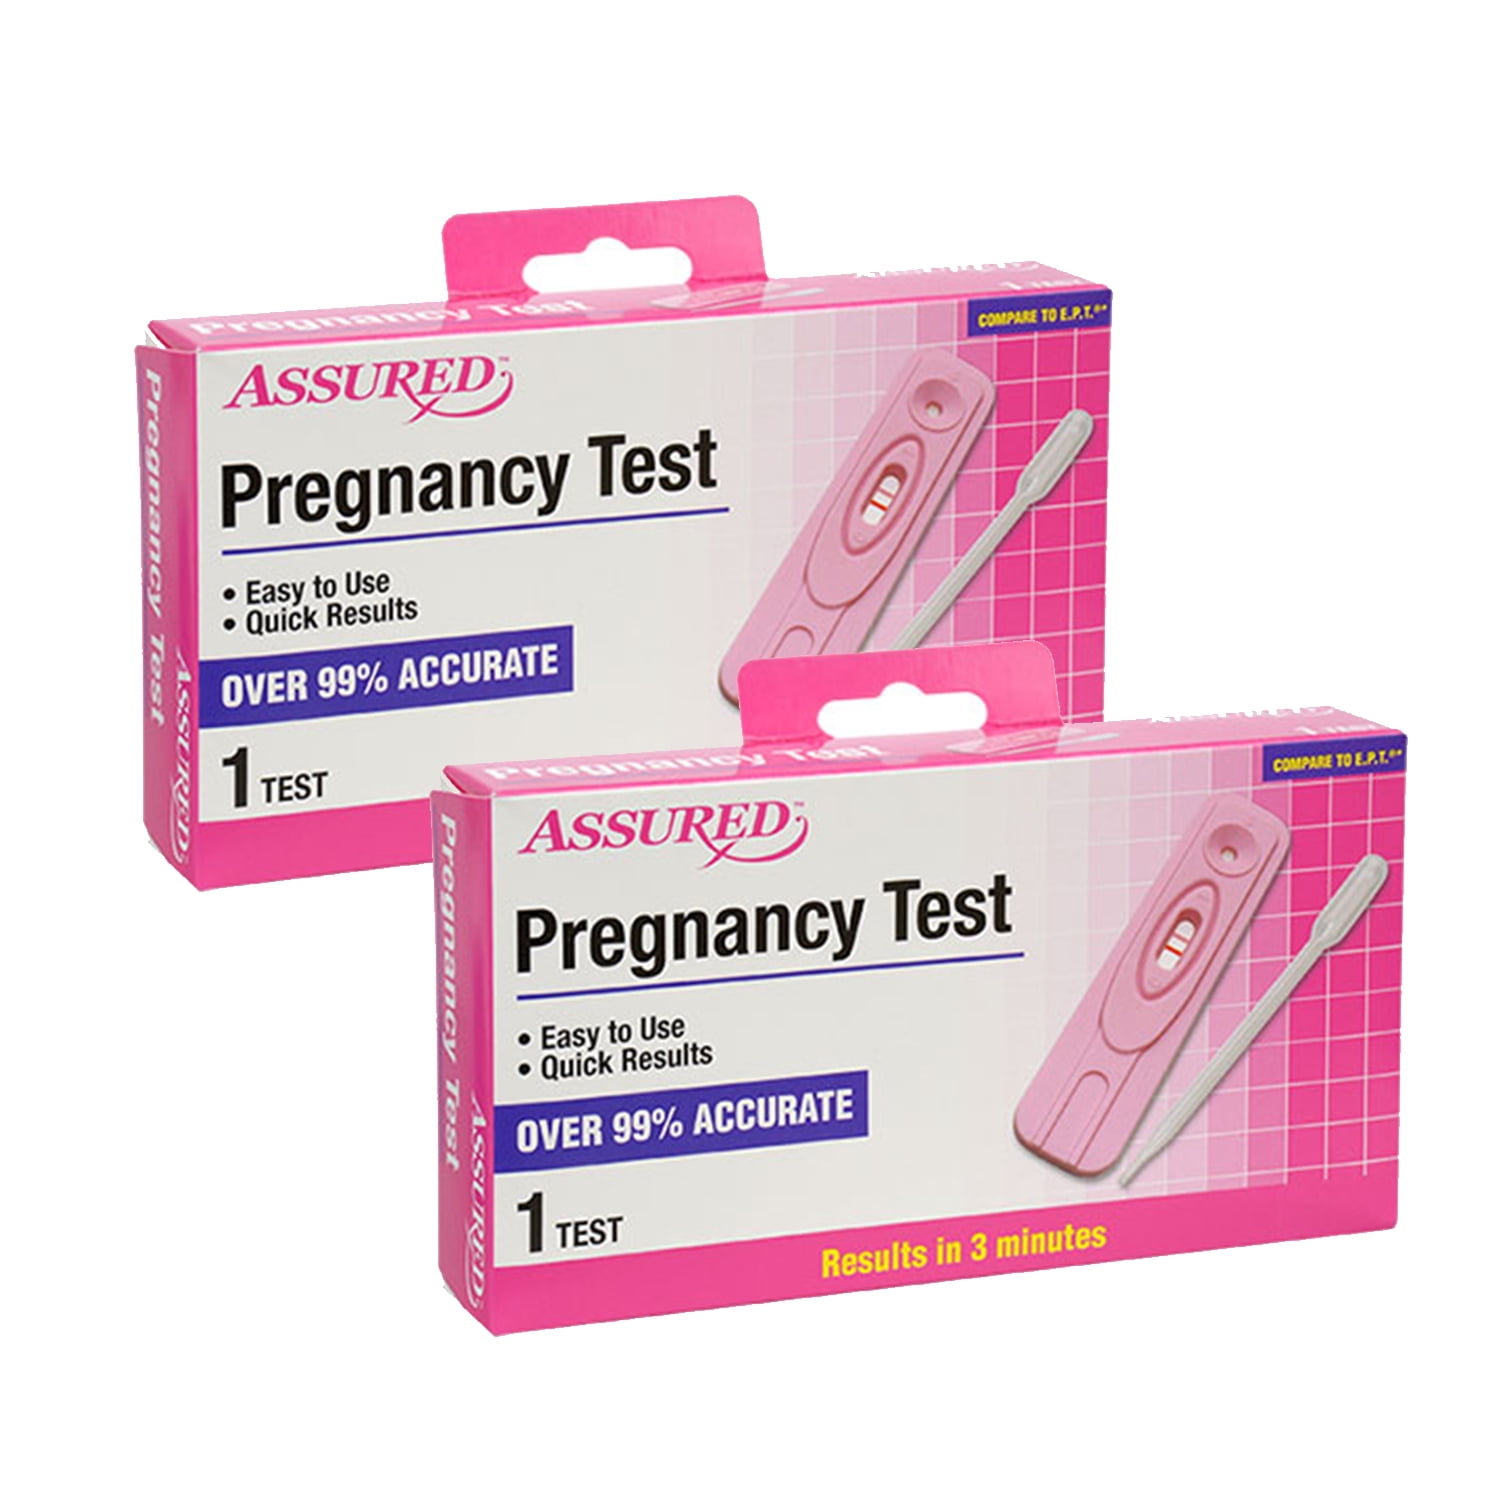 pregnancy test kit presentation